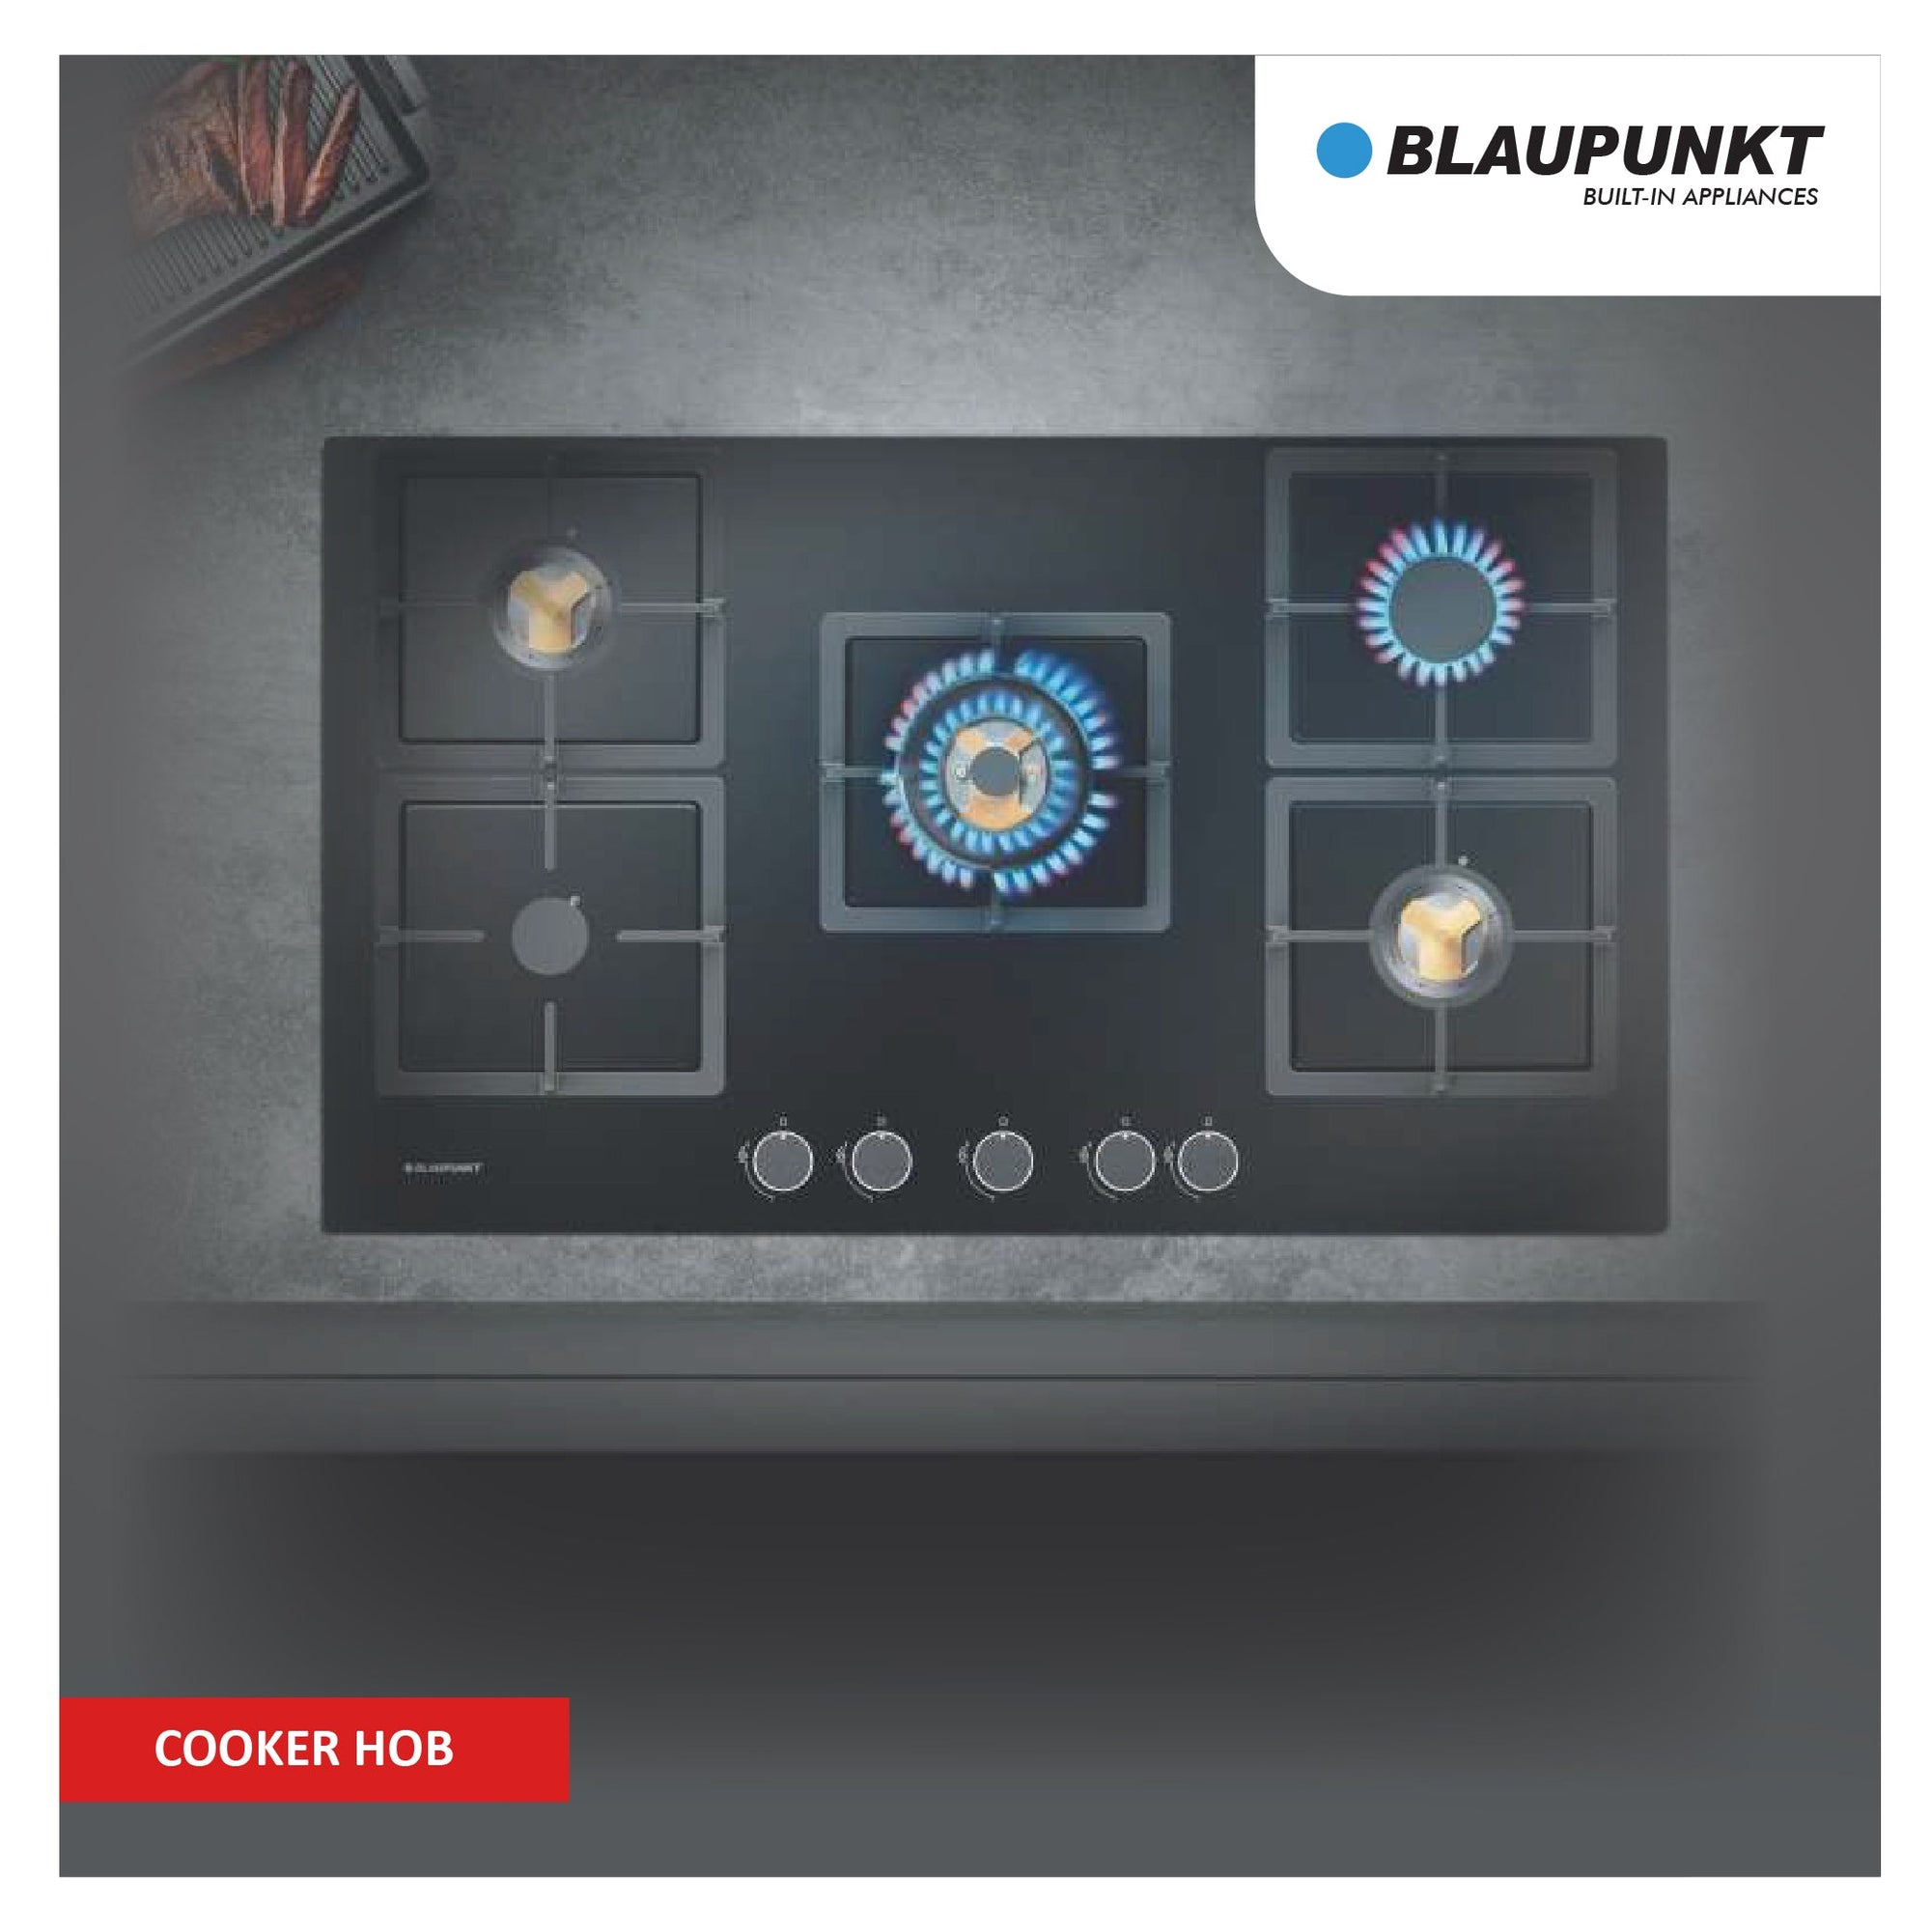 Blaupunkt Cooker Hob - Premium Kitchen Appliance Collection